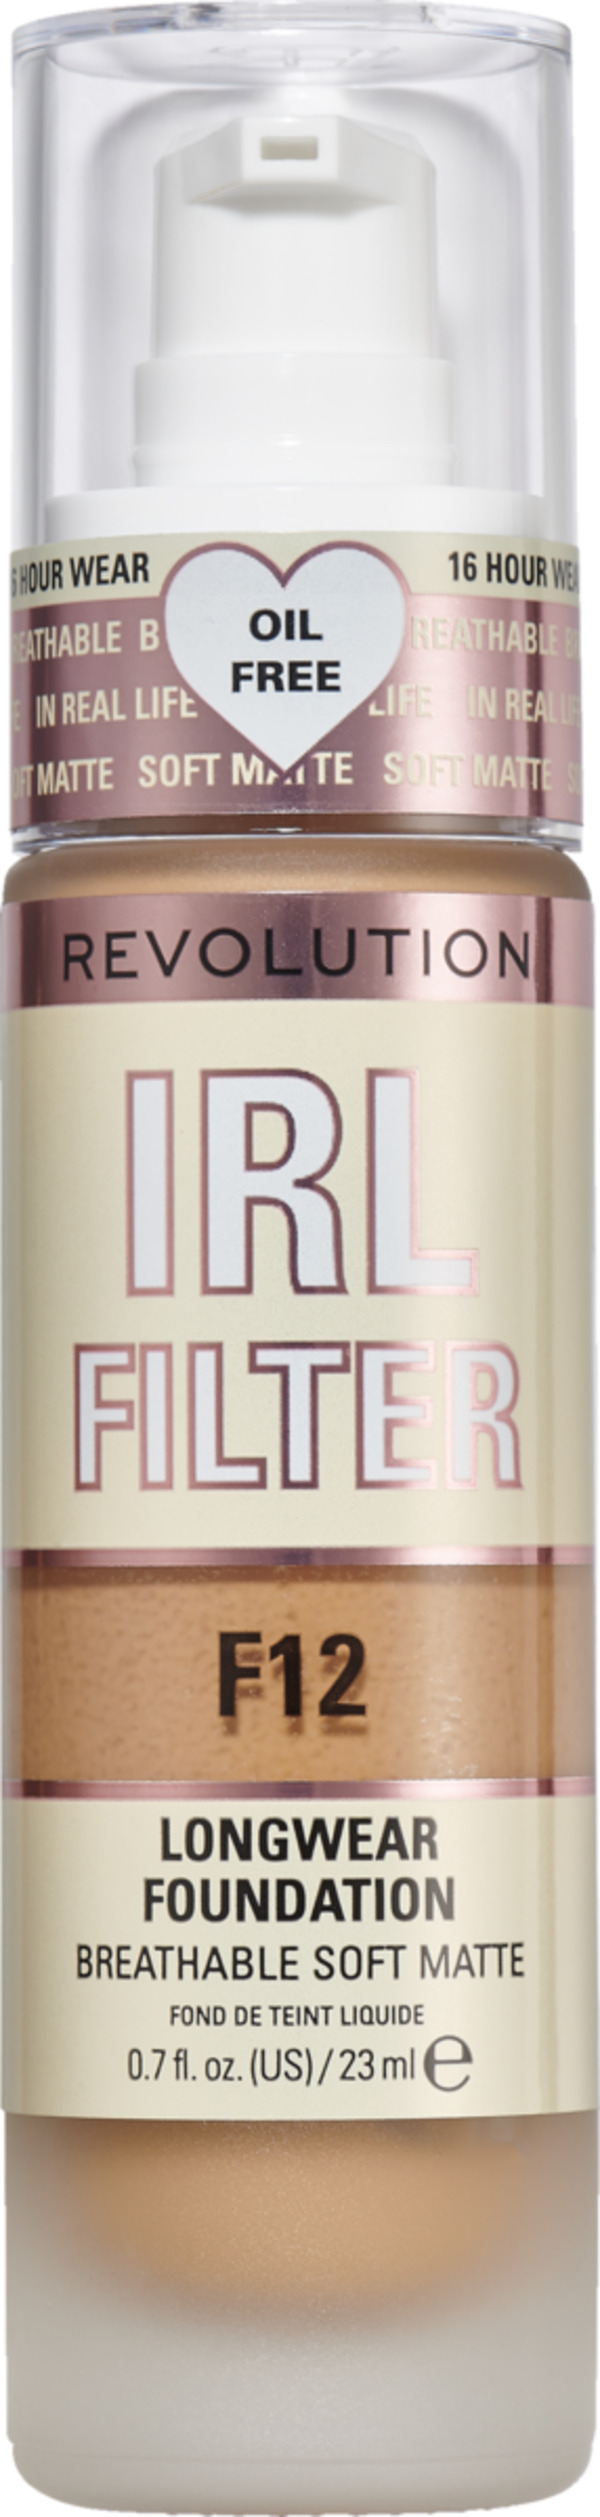 Bild 1 von Revolution Makeup Revolution IRL Filter Longwear Foundation F12